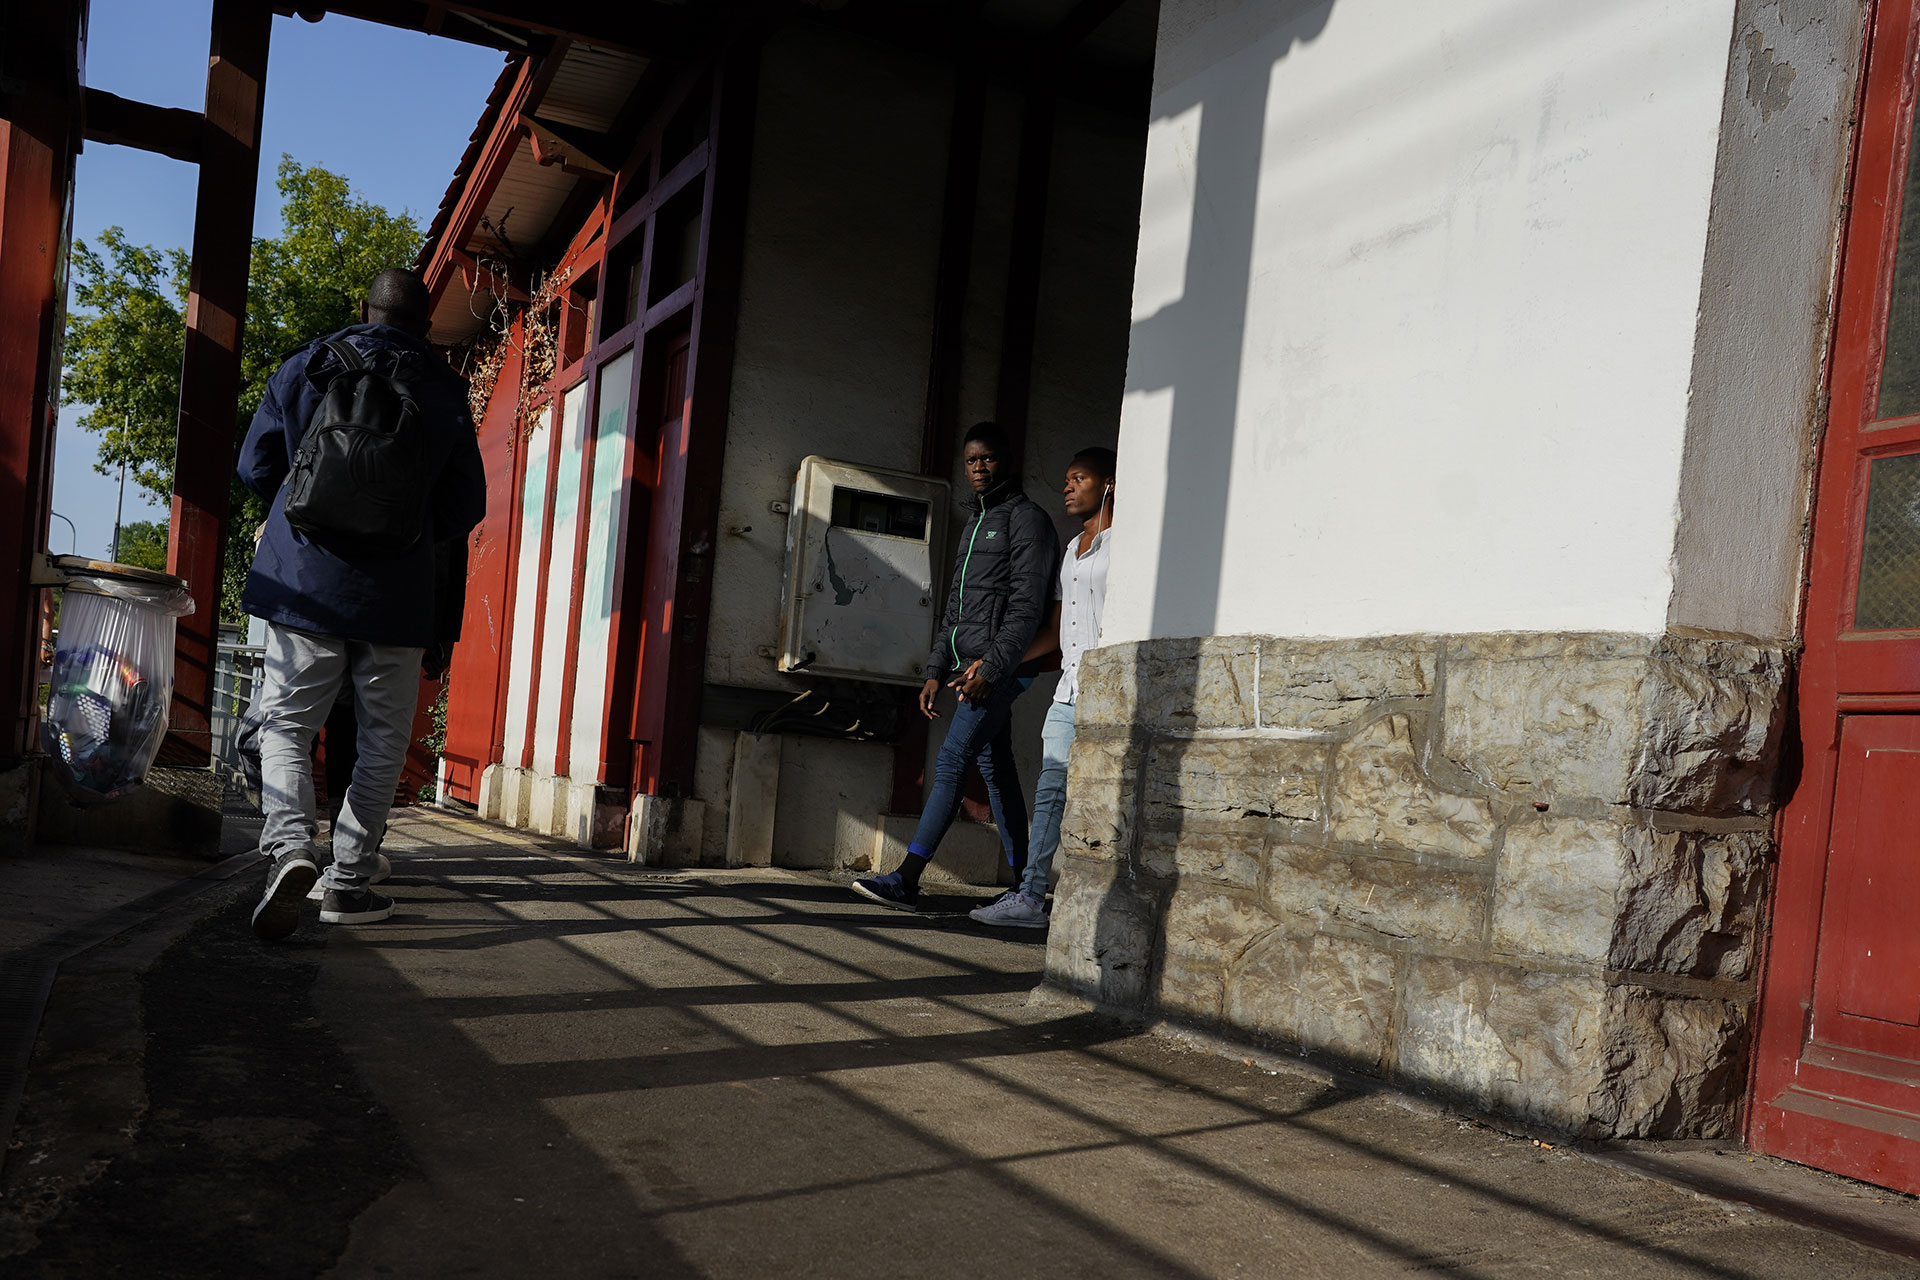 Ousmane llega a una estación de tren junto a tres compañeros antes de tomar un tren para intentar llegar a Bayona, 17 de Septiembre de 2019.